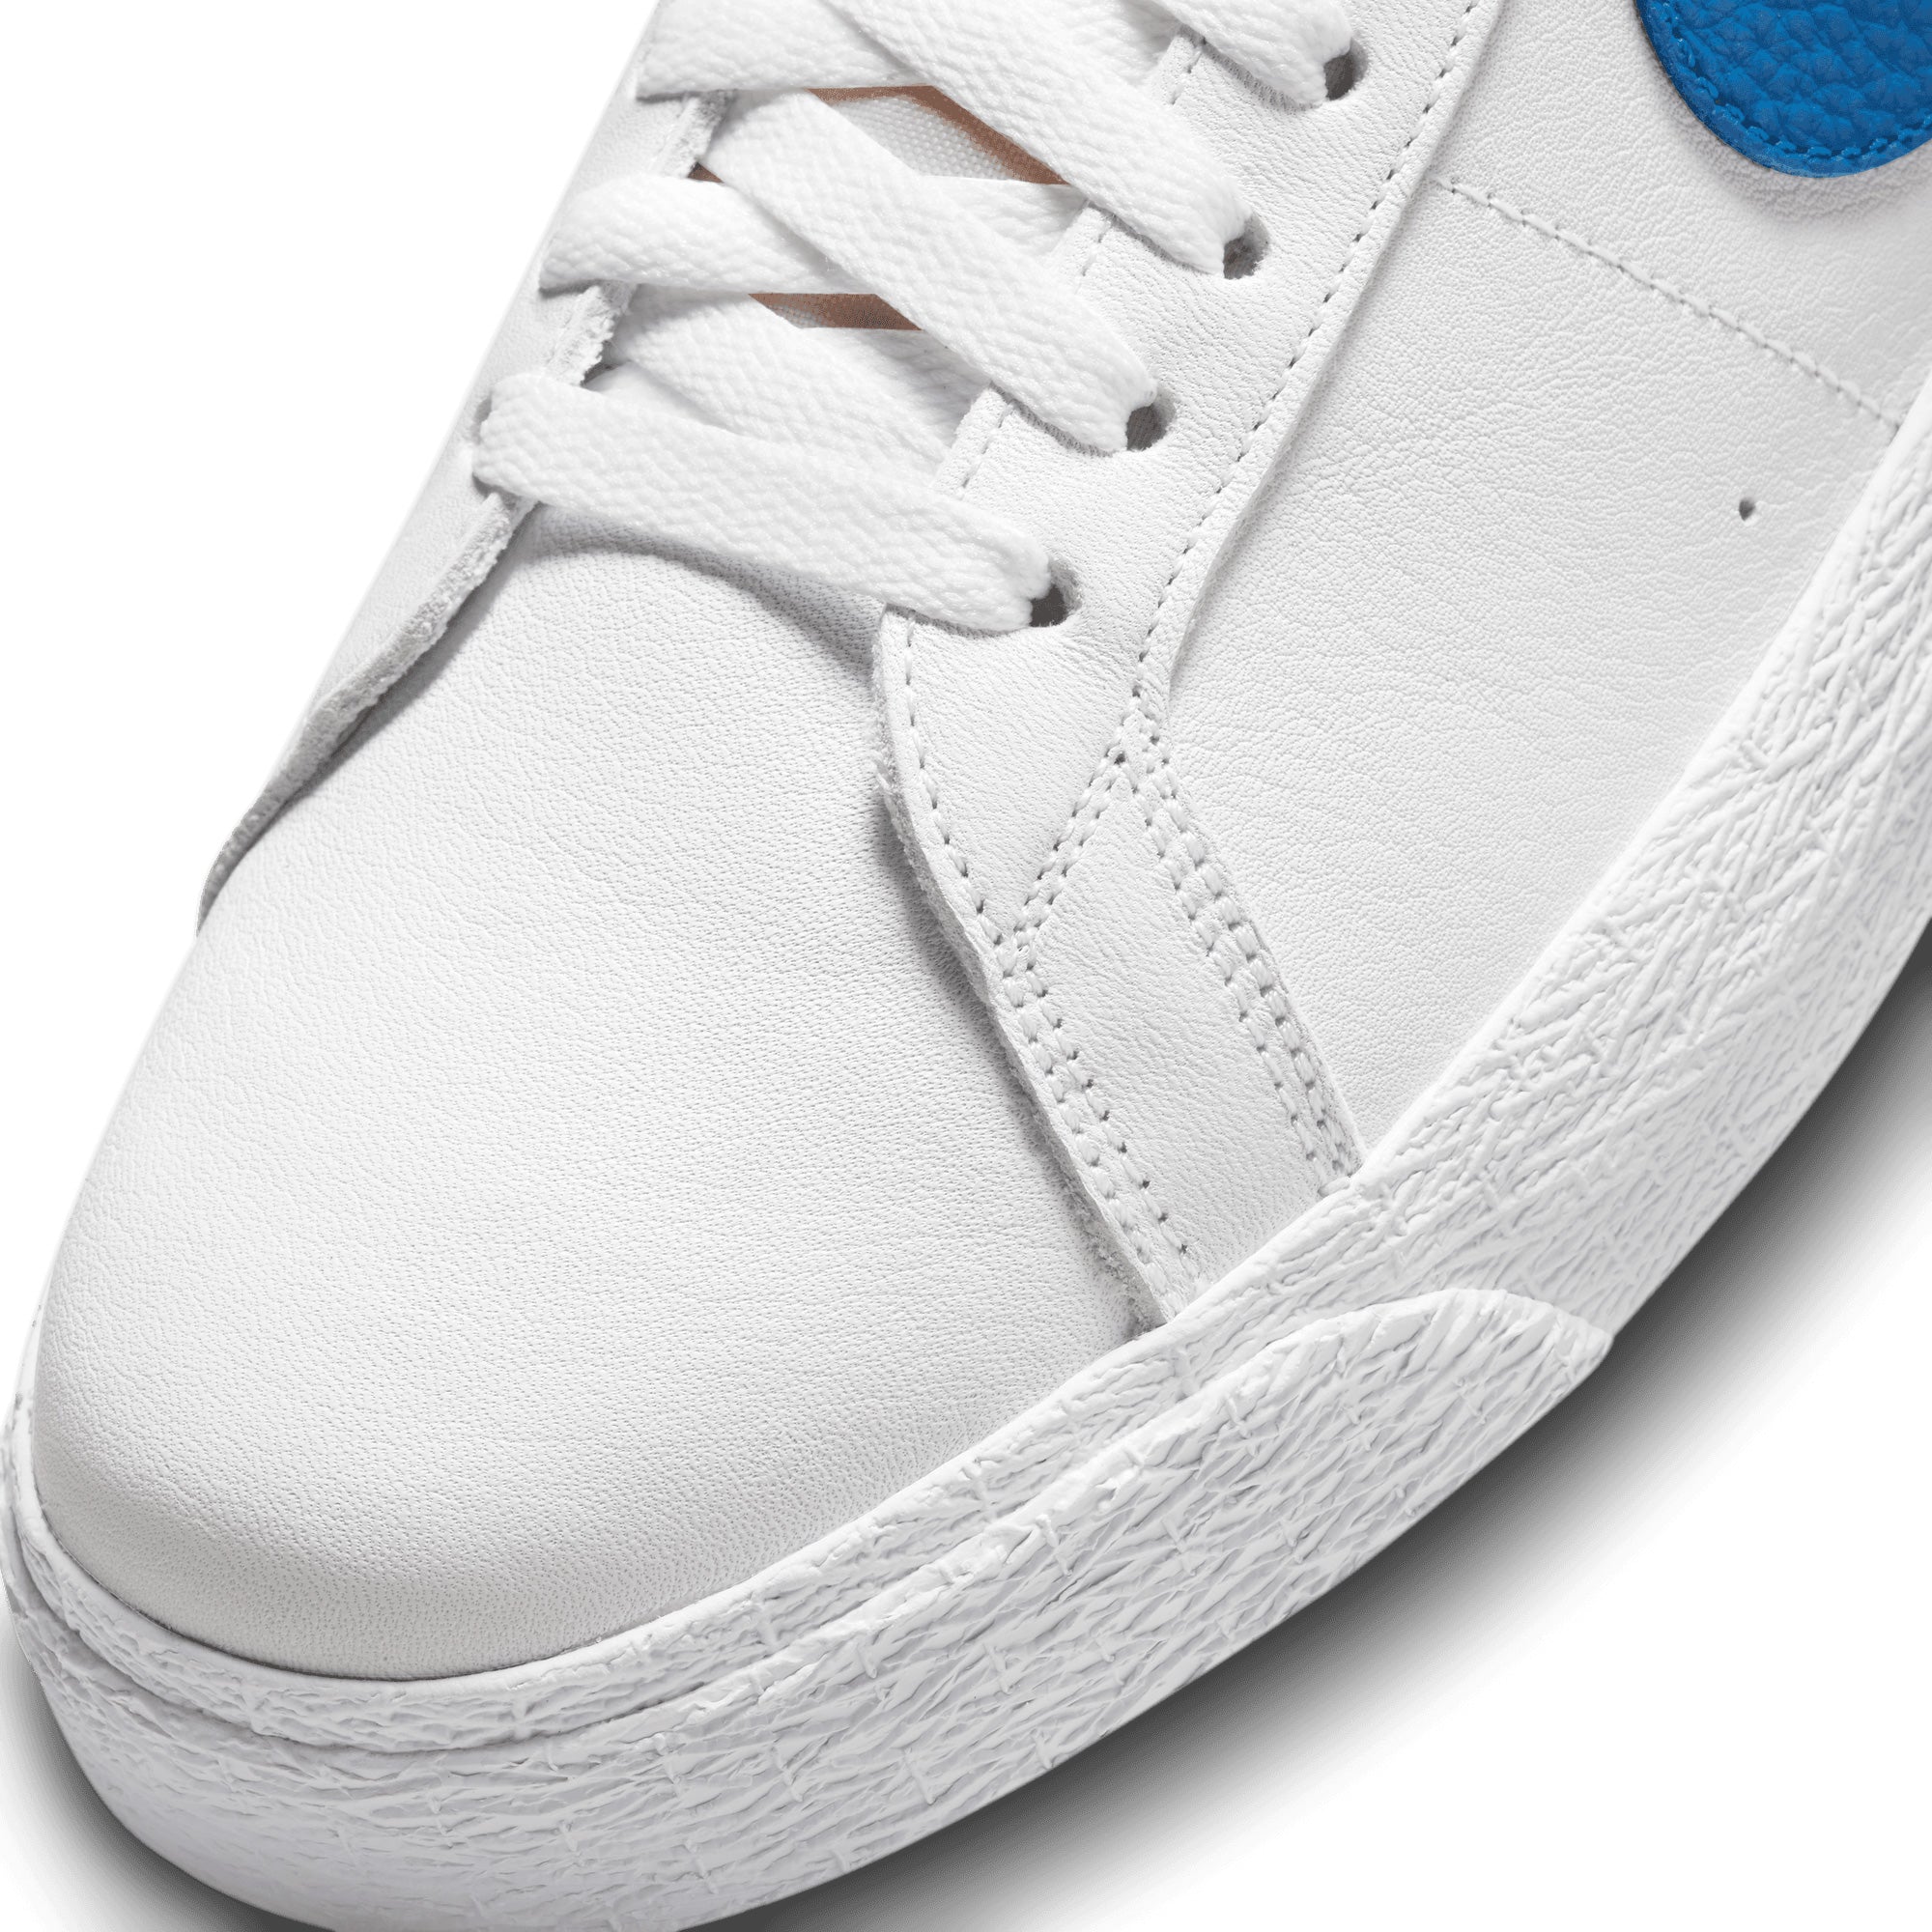 Nike SB ISO Zoom Blazer Mid Shoes - White/Varsity Royal-White